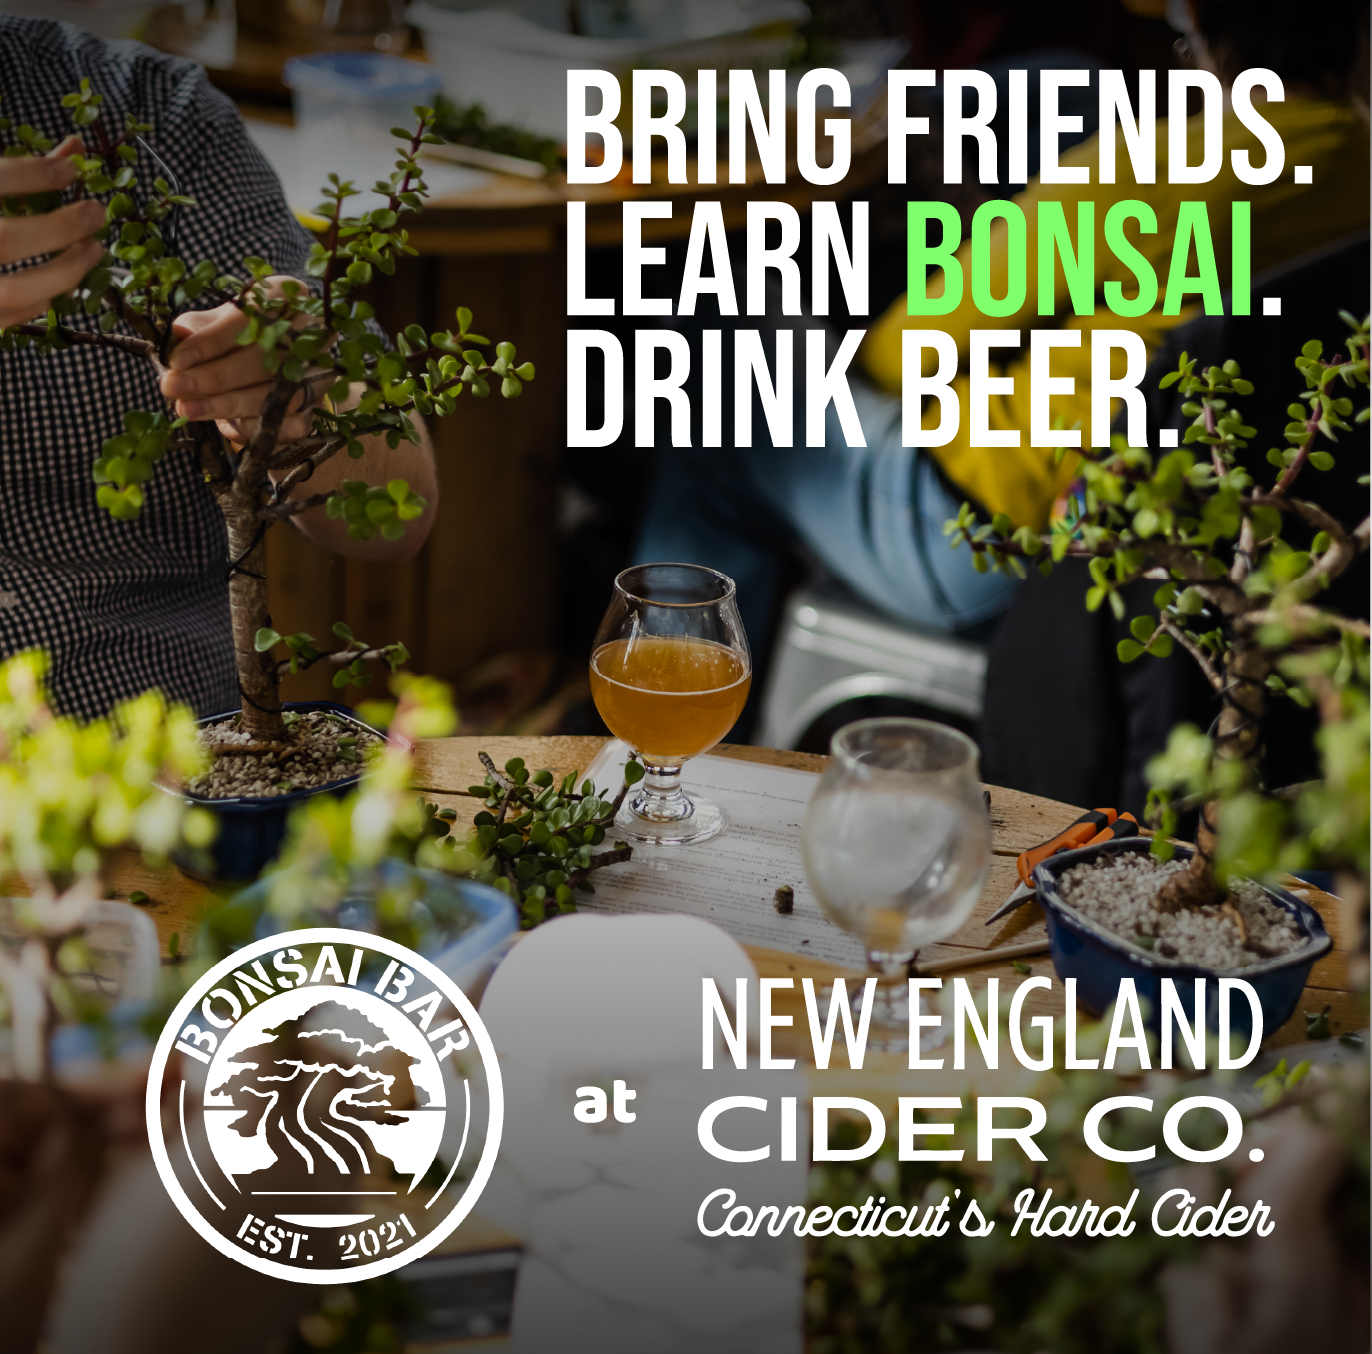 New England Cider Co.